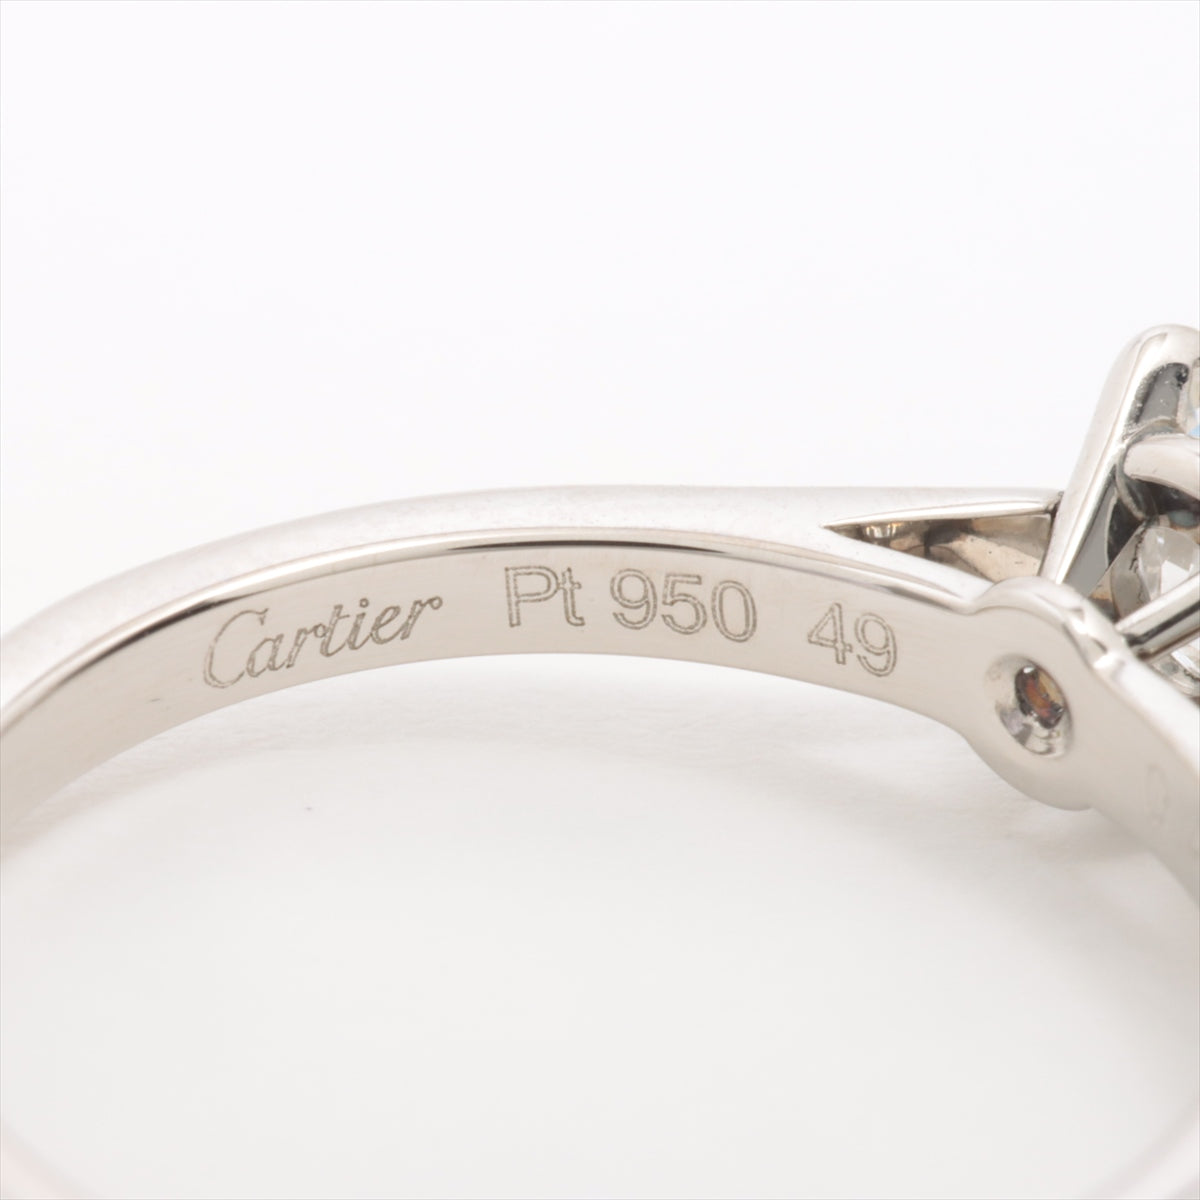 Cartier Solitaire 1895 Diamond Ring Pt950 3.1g 0.47 49